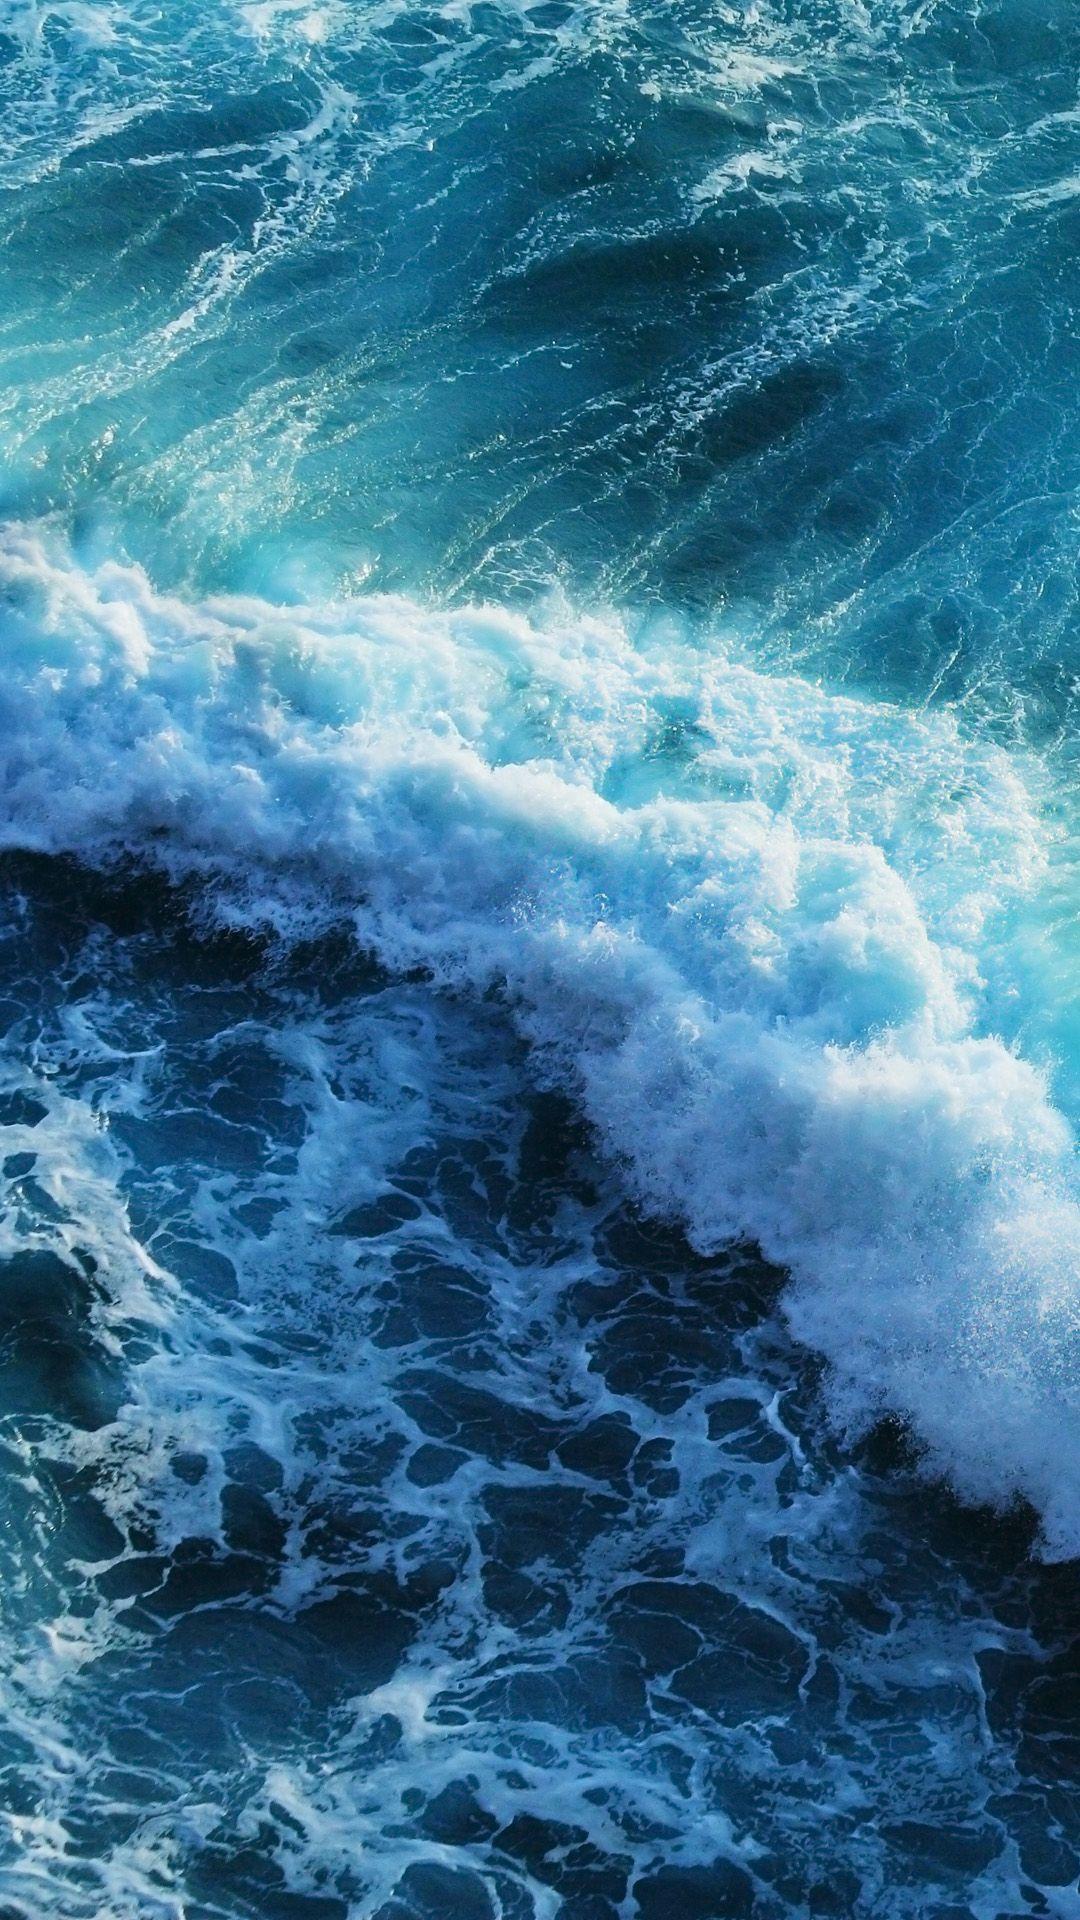 Beautiful blue waves iphone 6 plus wallpaper. iPhone 6 Plus